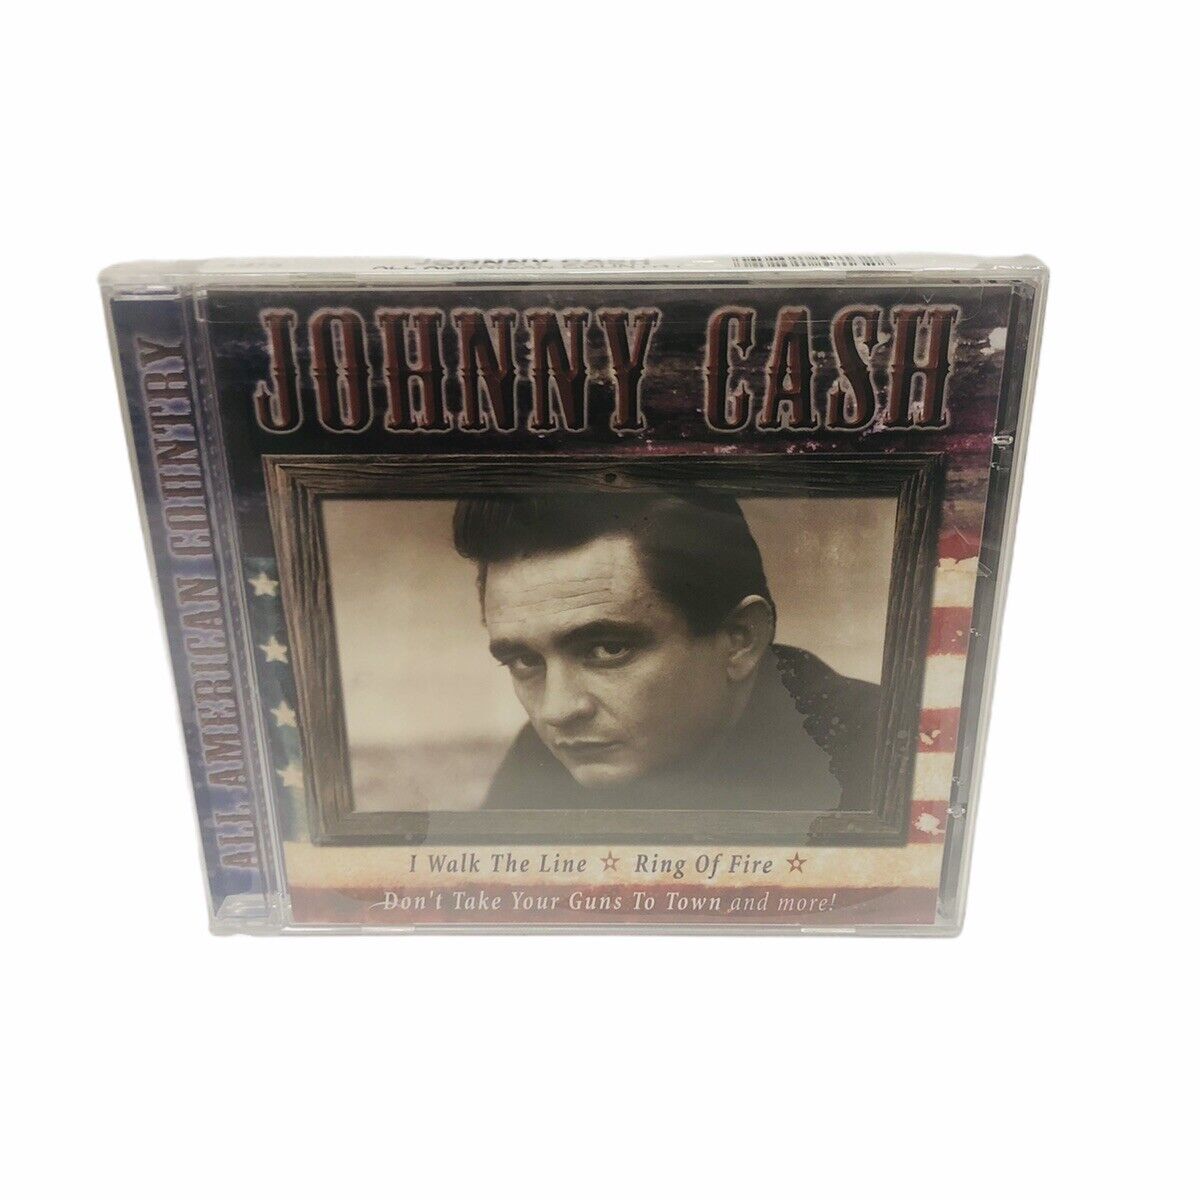 Giant Hits [Sony] by Johnny Cash (CD, Jul-2002, Sony Music Distribution (USA))